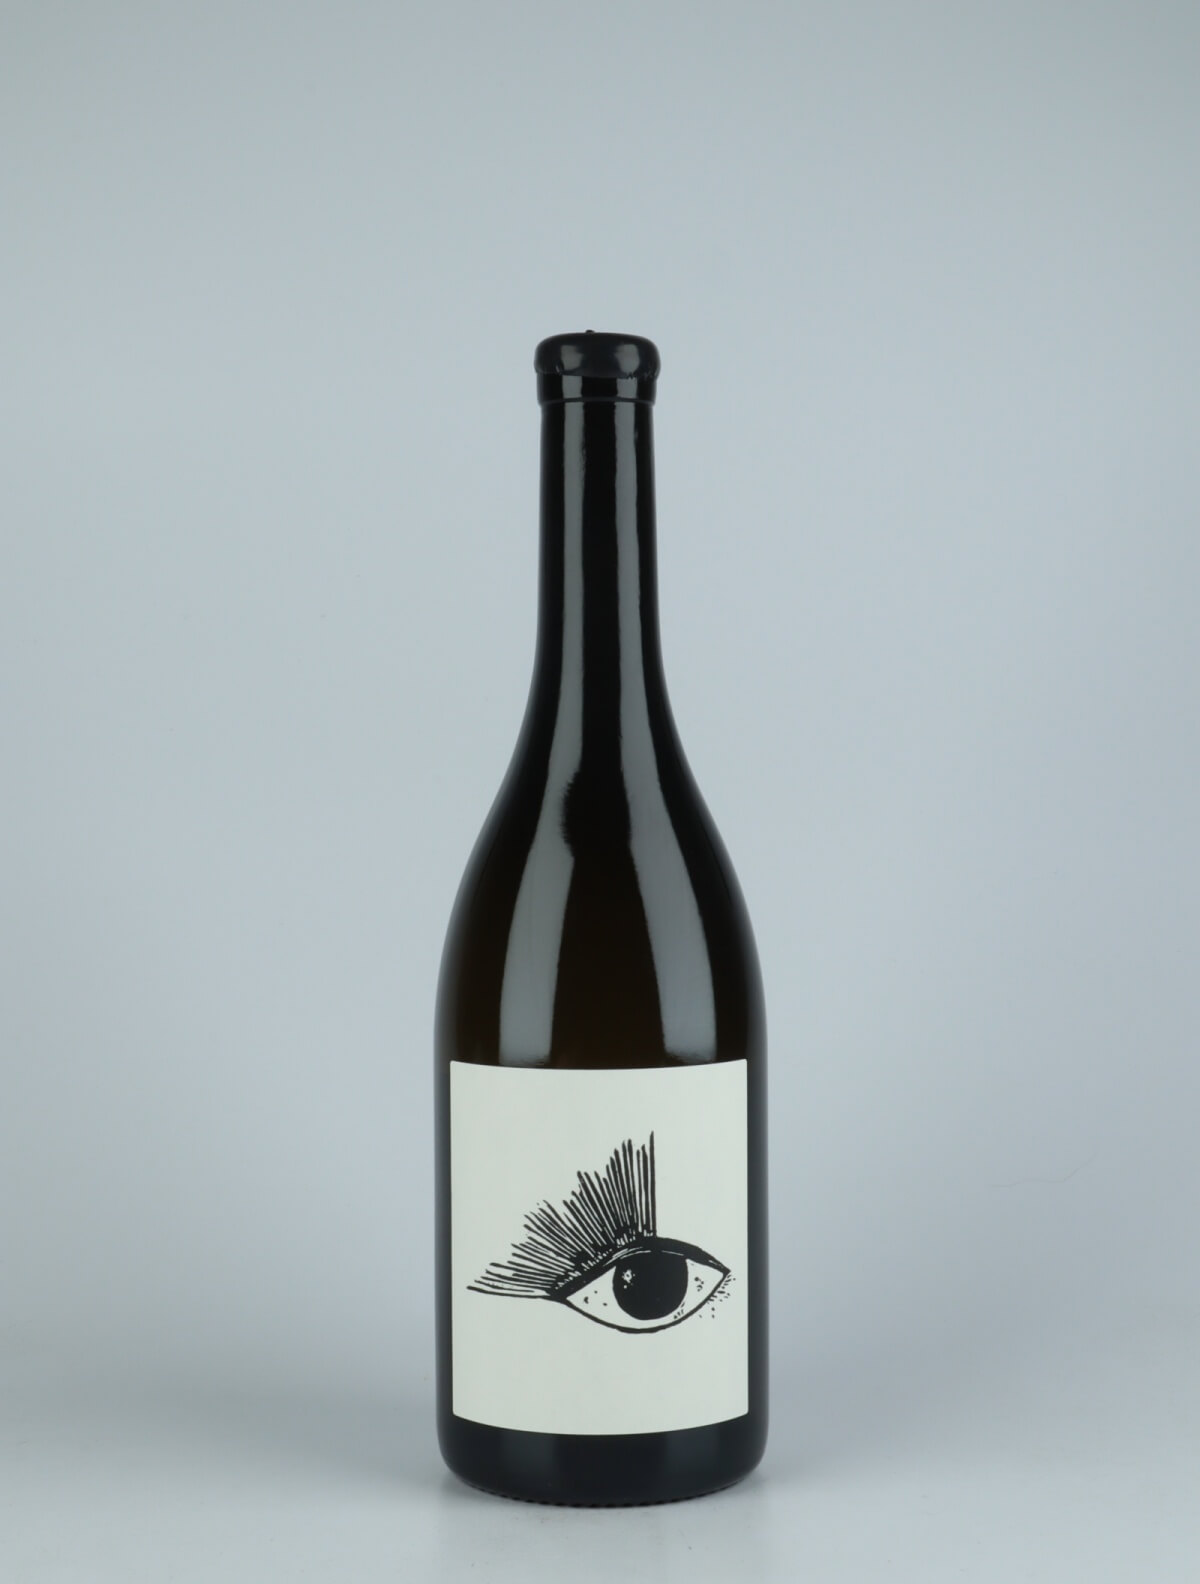 A bottle 2020 Bouzeron - Alibi #3 White wine from Vin Noé, Burgundy in France